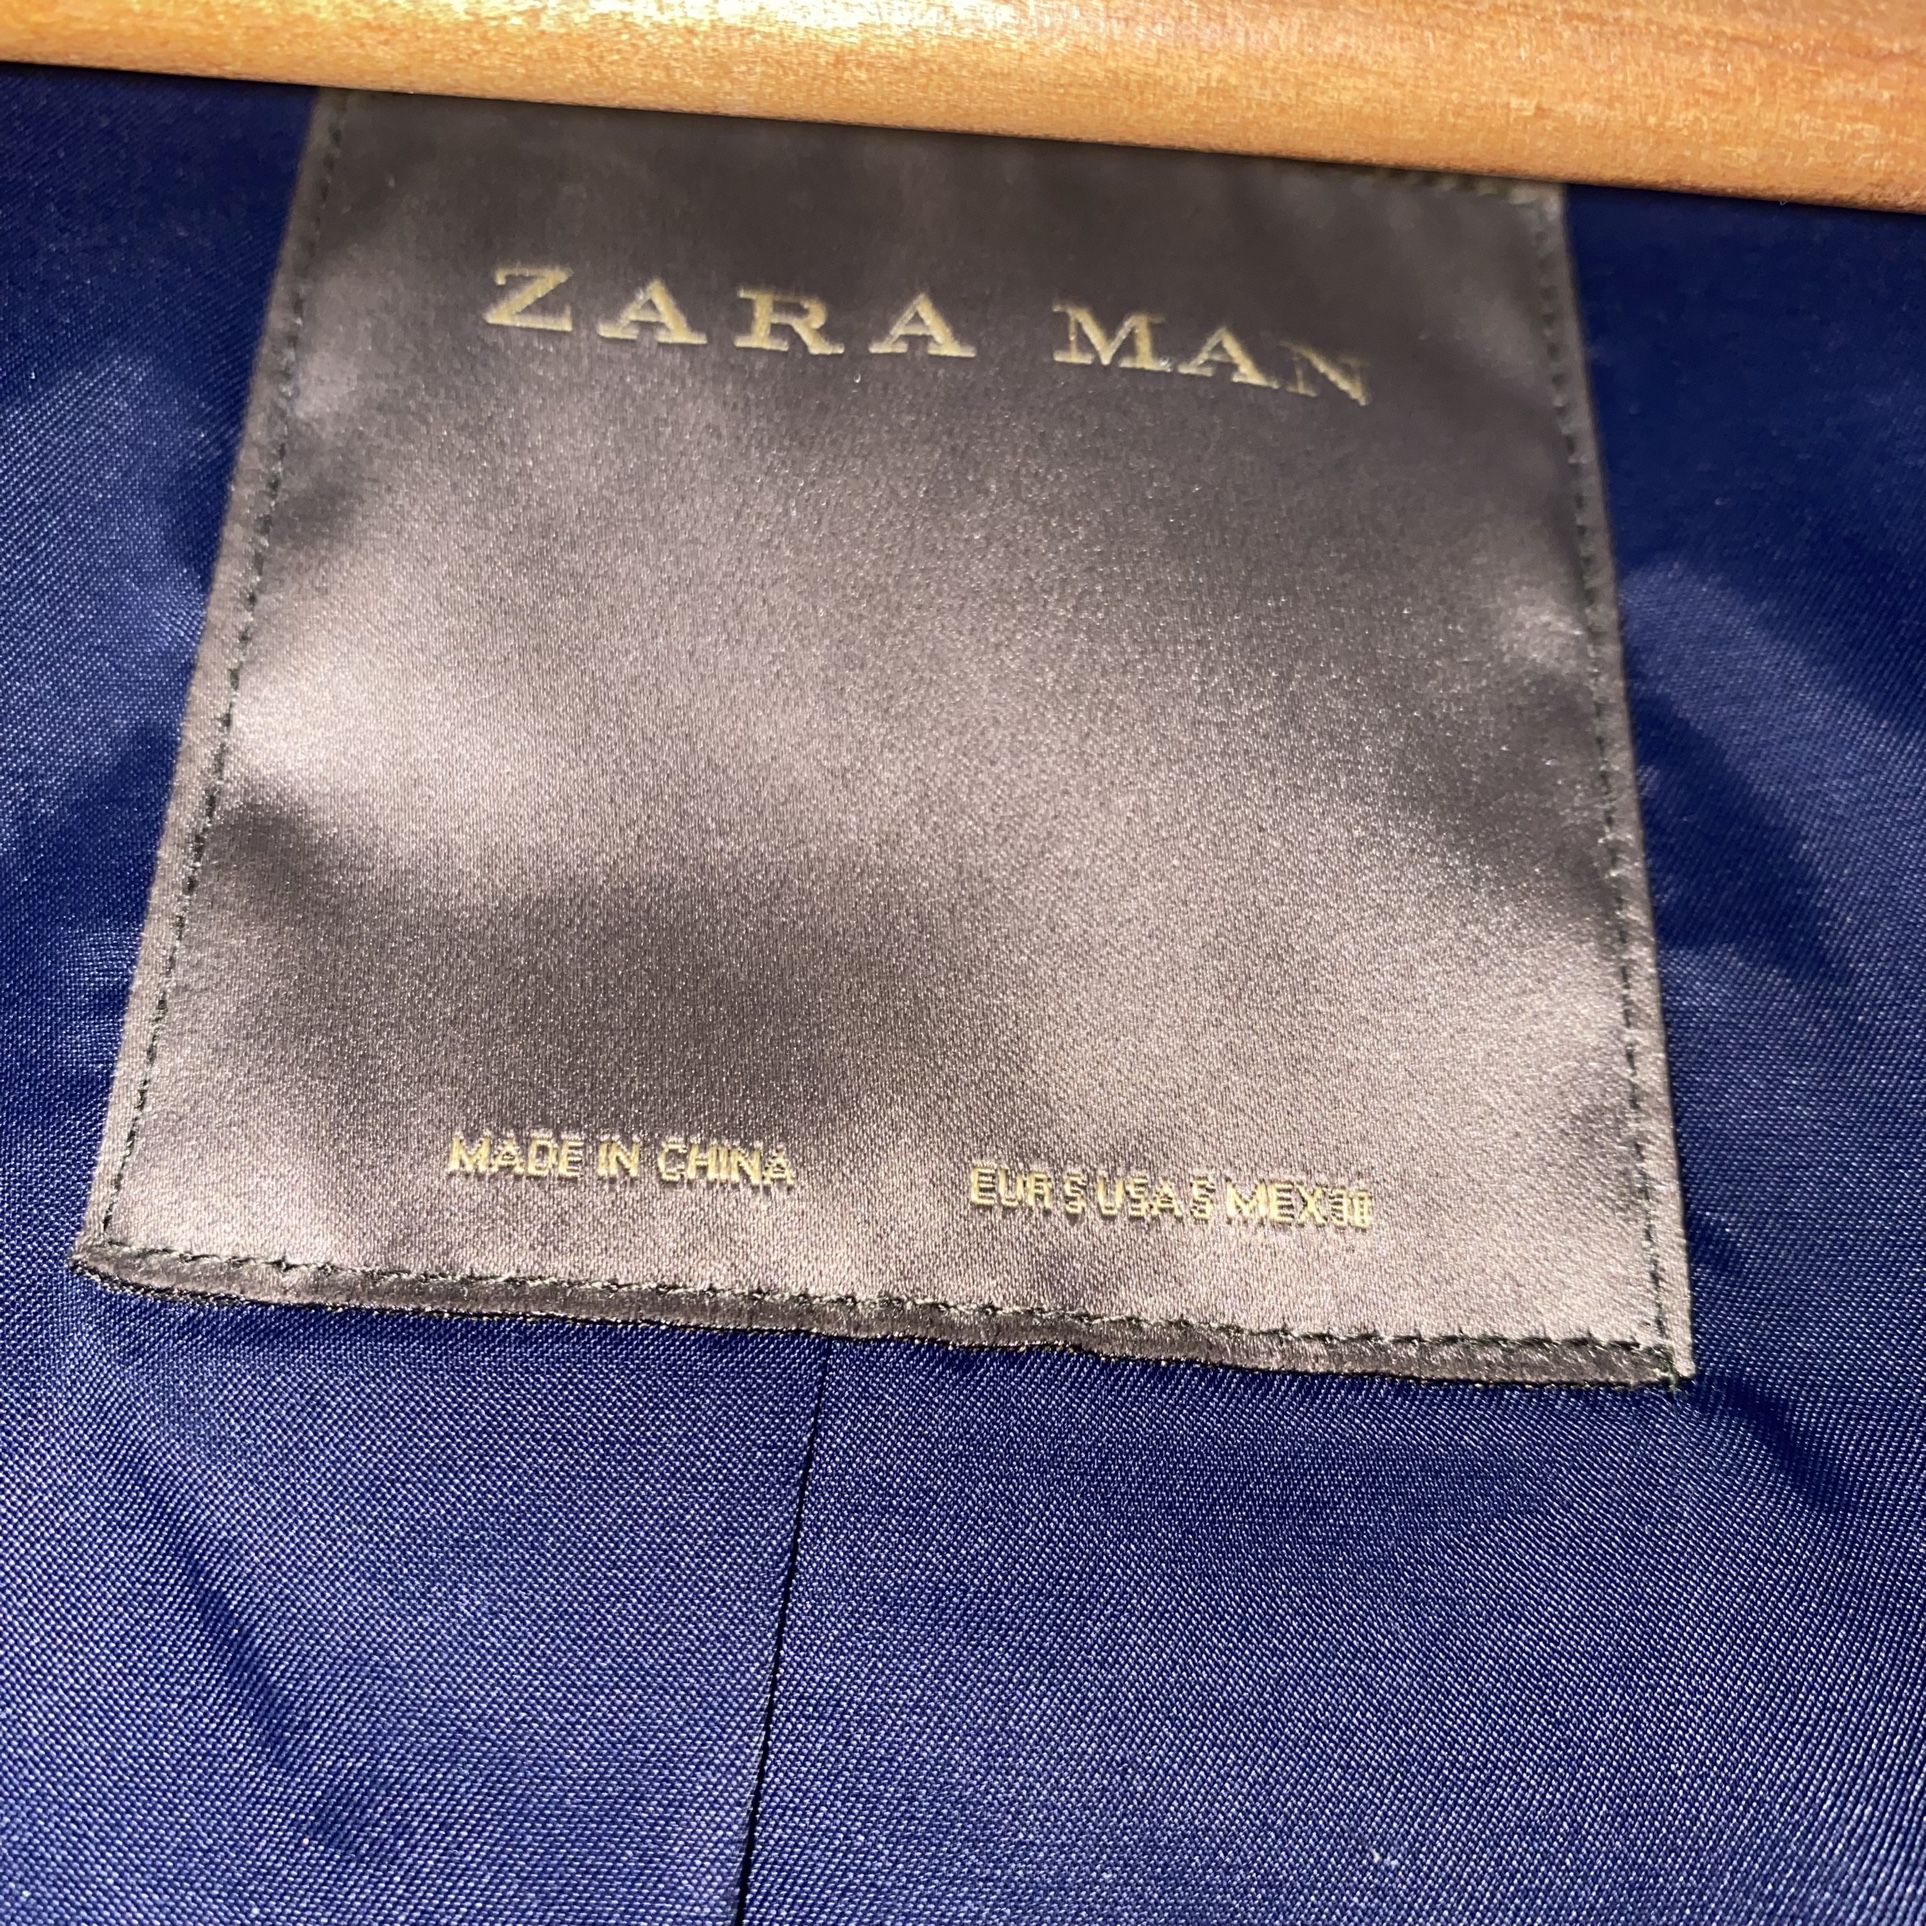 Zara  Men’s Leather Jacket Small 